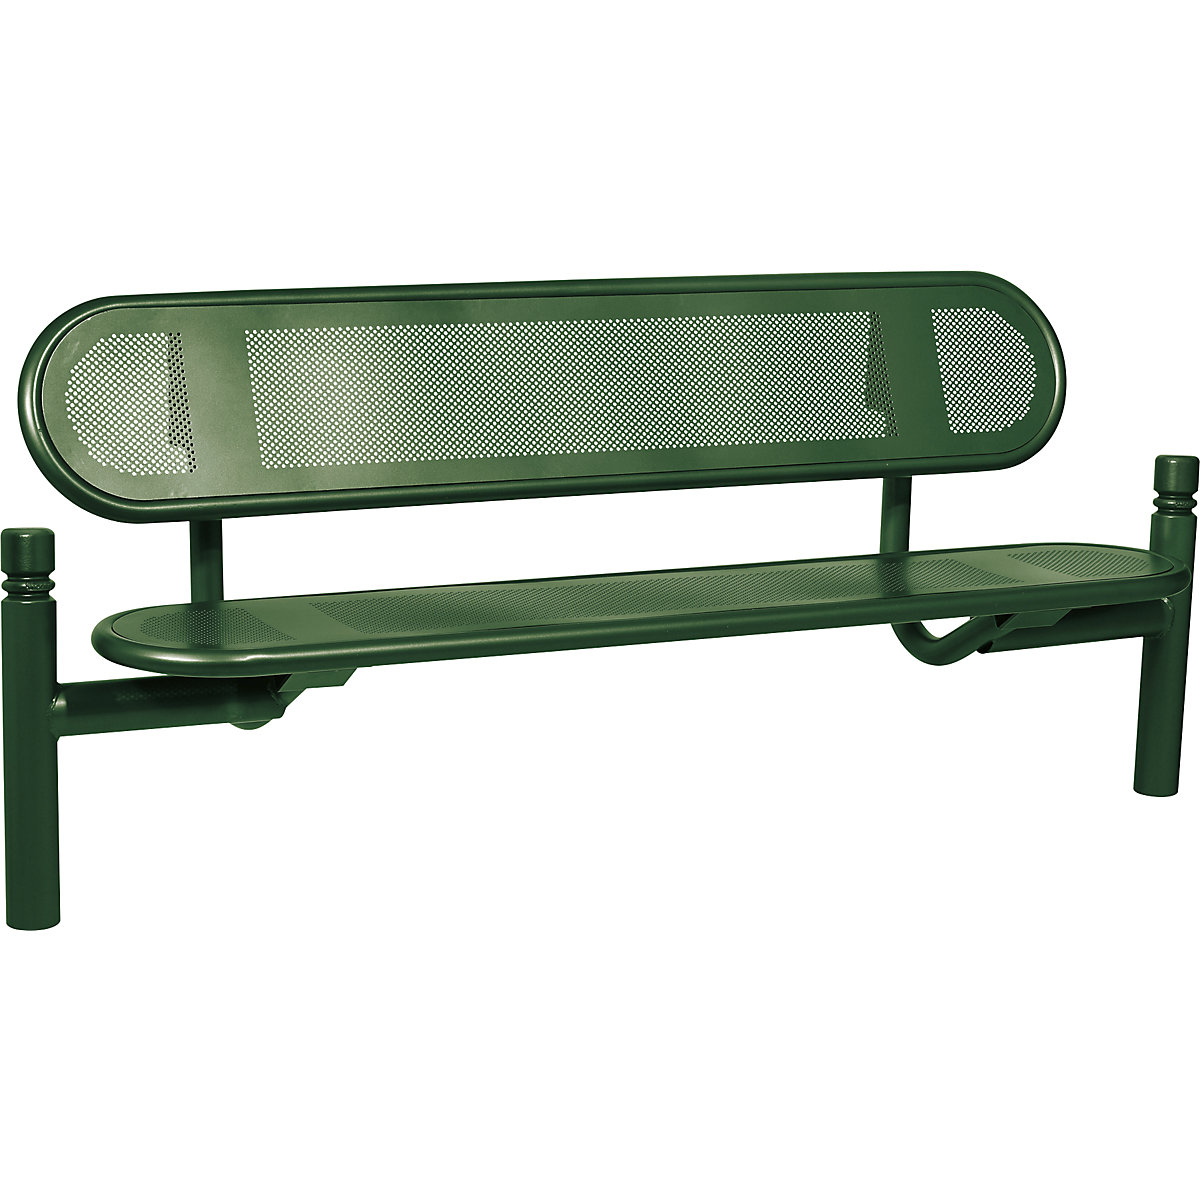 ESTORIL bench – PROCITY, city, length 1800 mm, moss green, with back rest-2